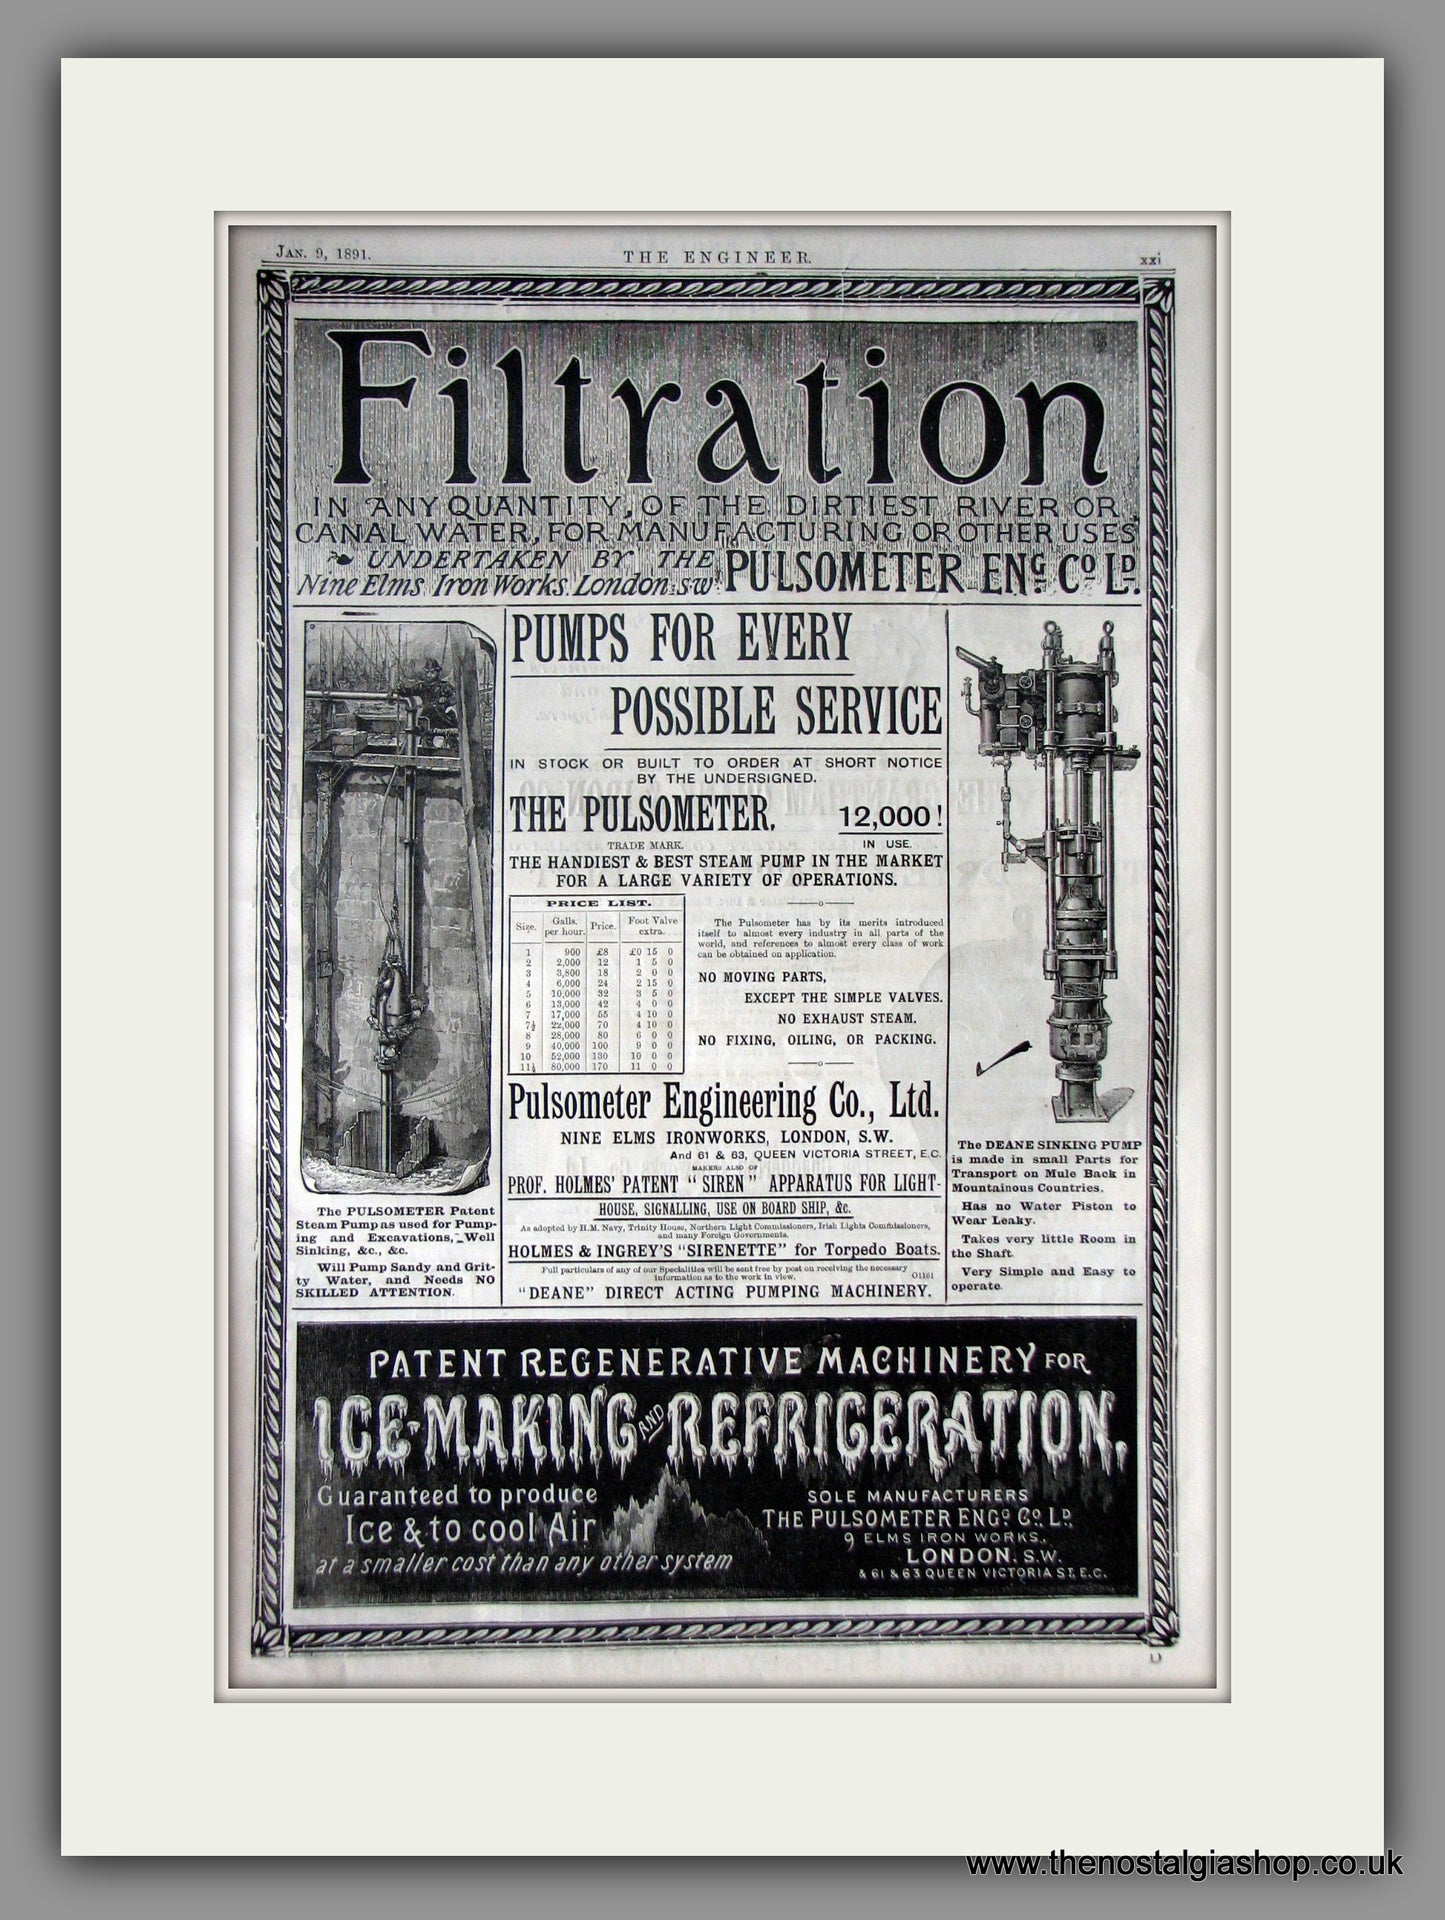 Pulsometer Engineering Co. Ltd. Filtration Pumps. Original Advert 1891 (ref AD11225)